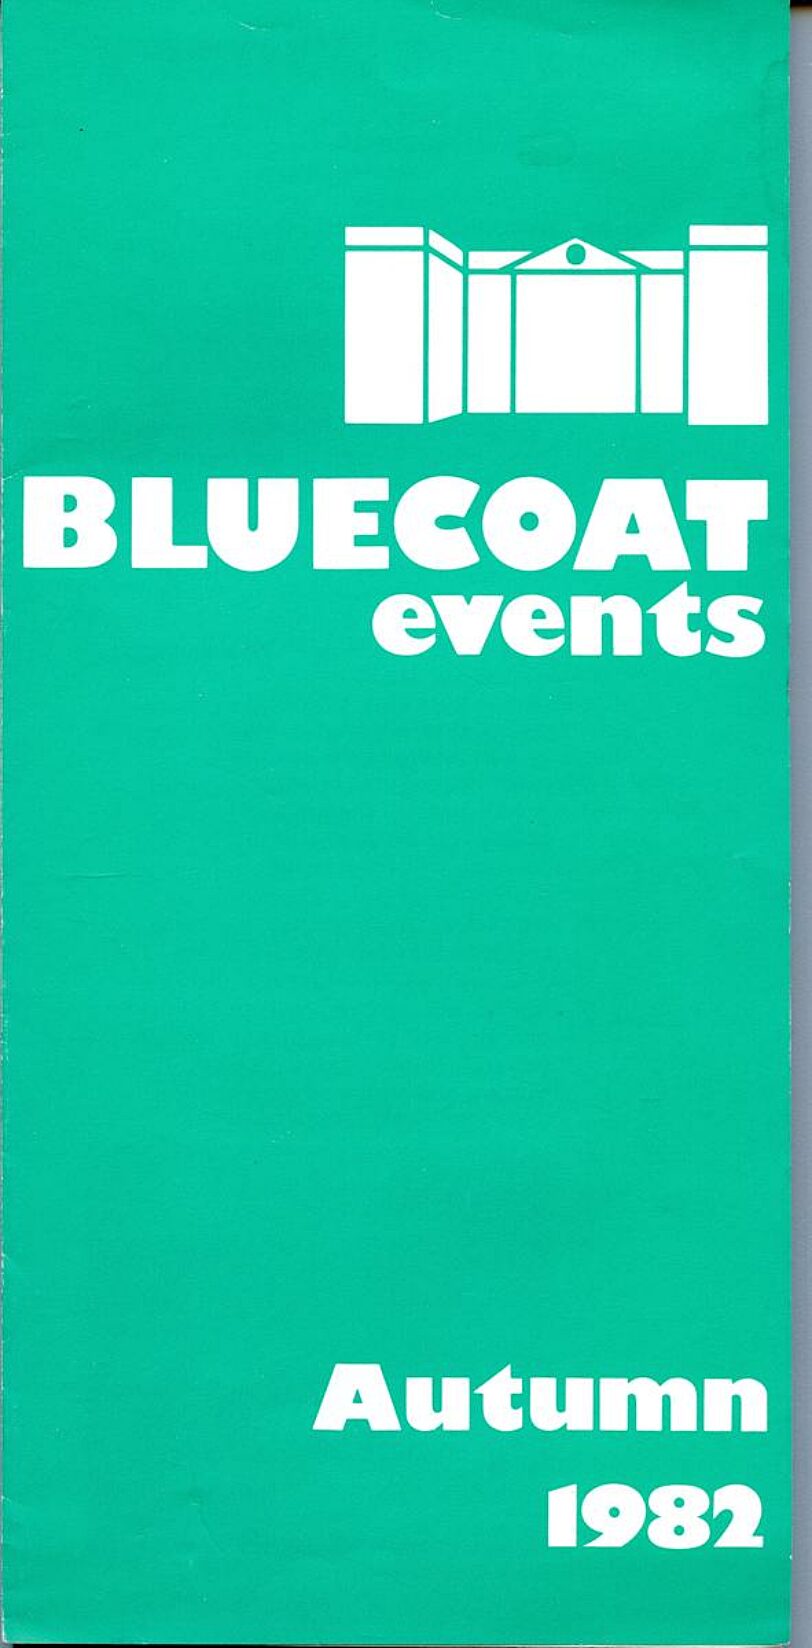 Autumn 1982 Events Brochure